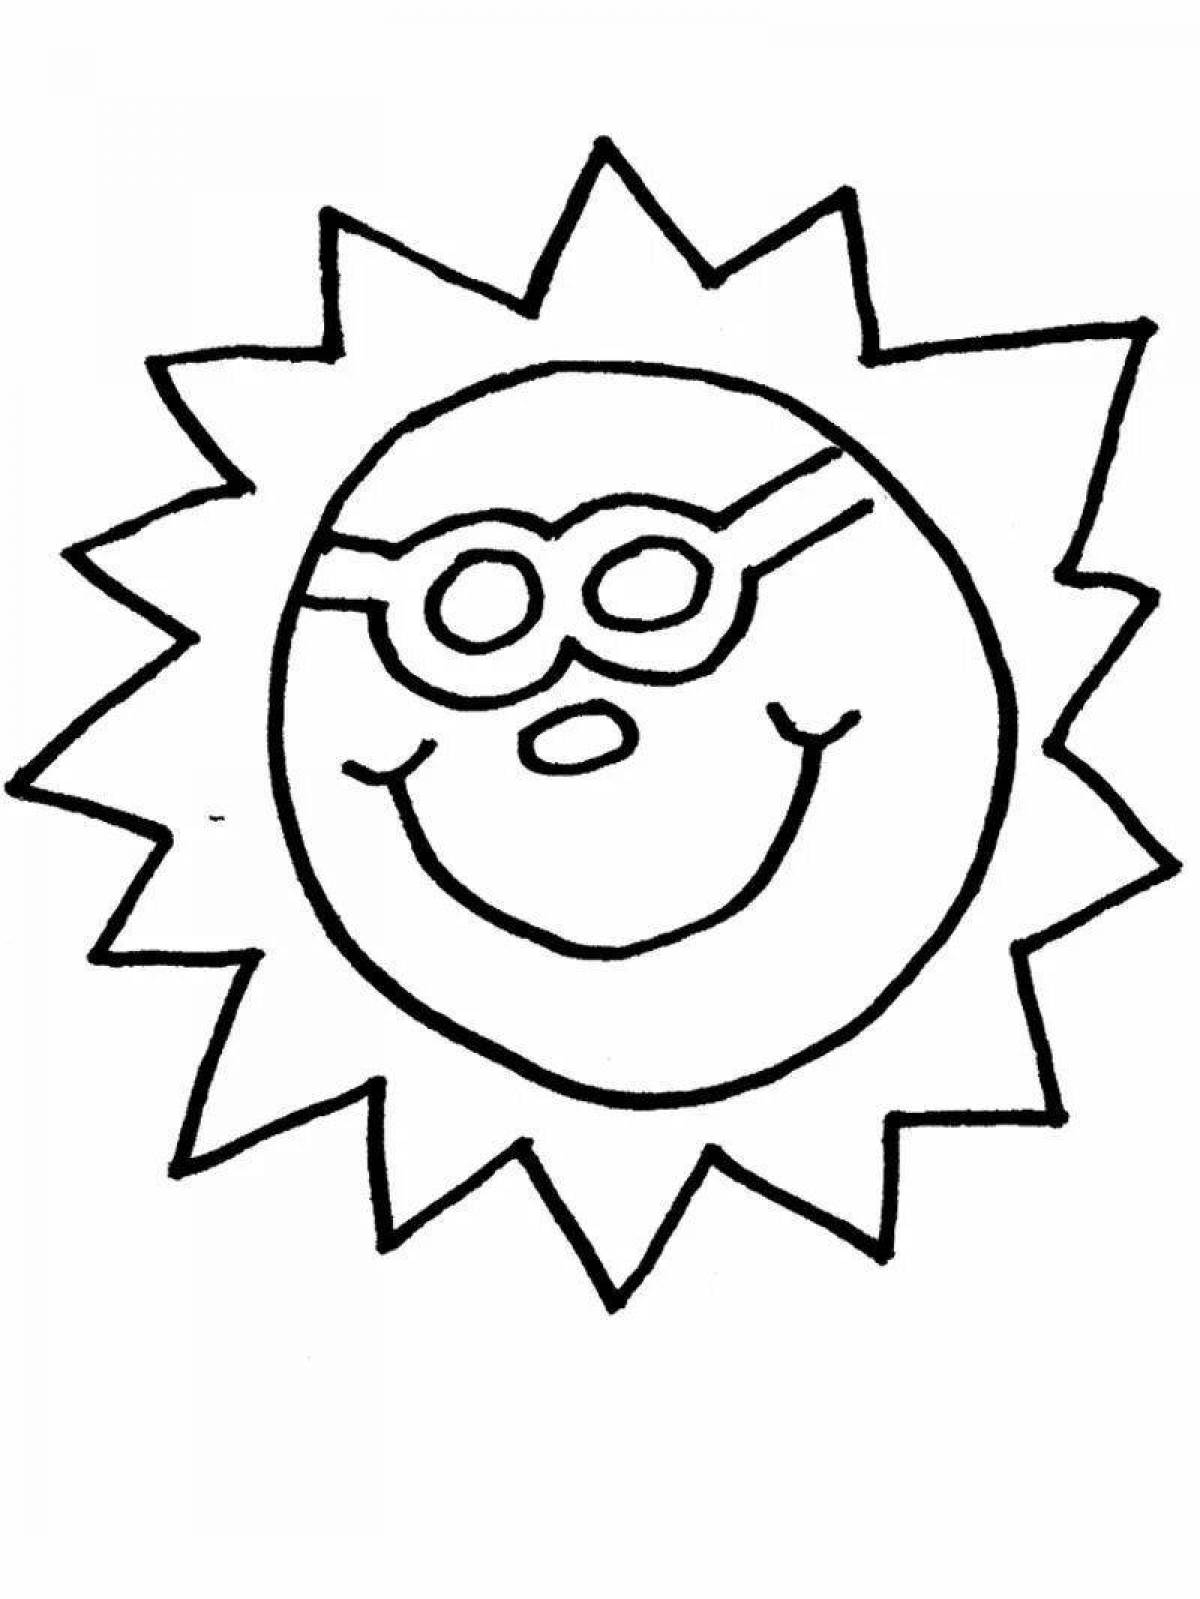 Изысканная раскраска солнце для детей